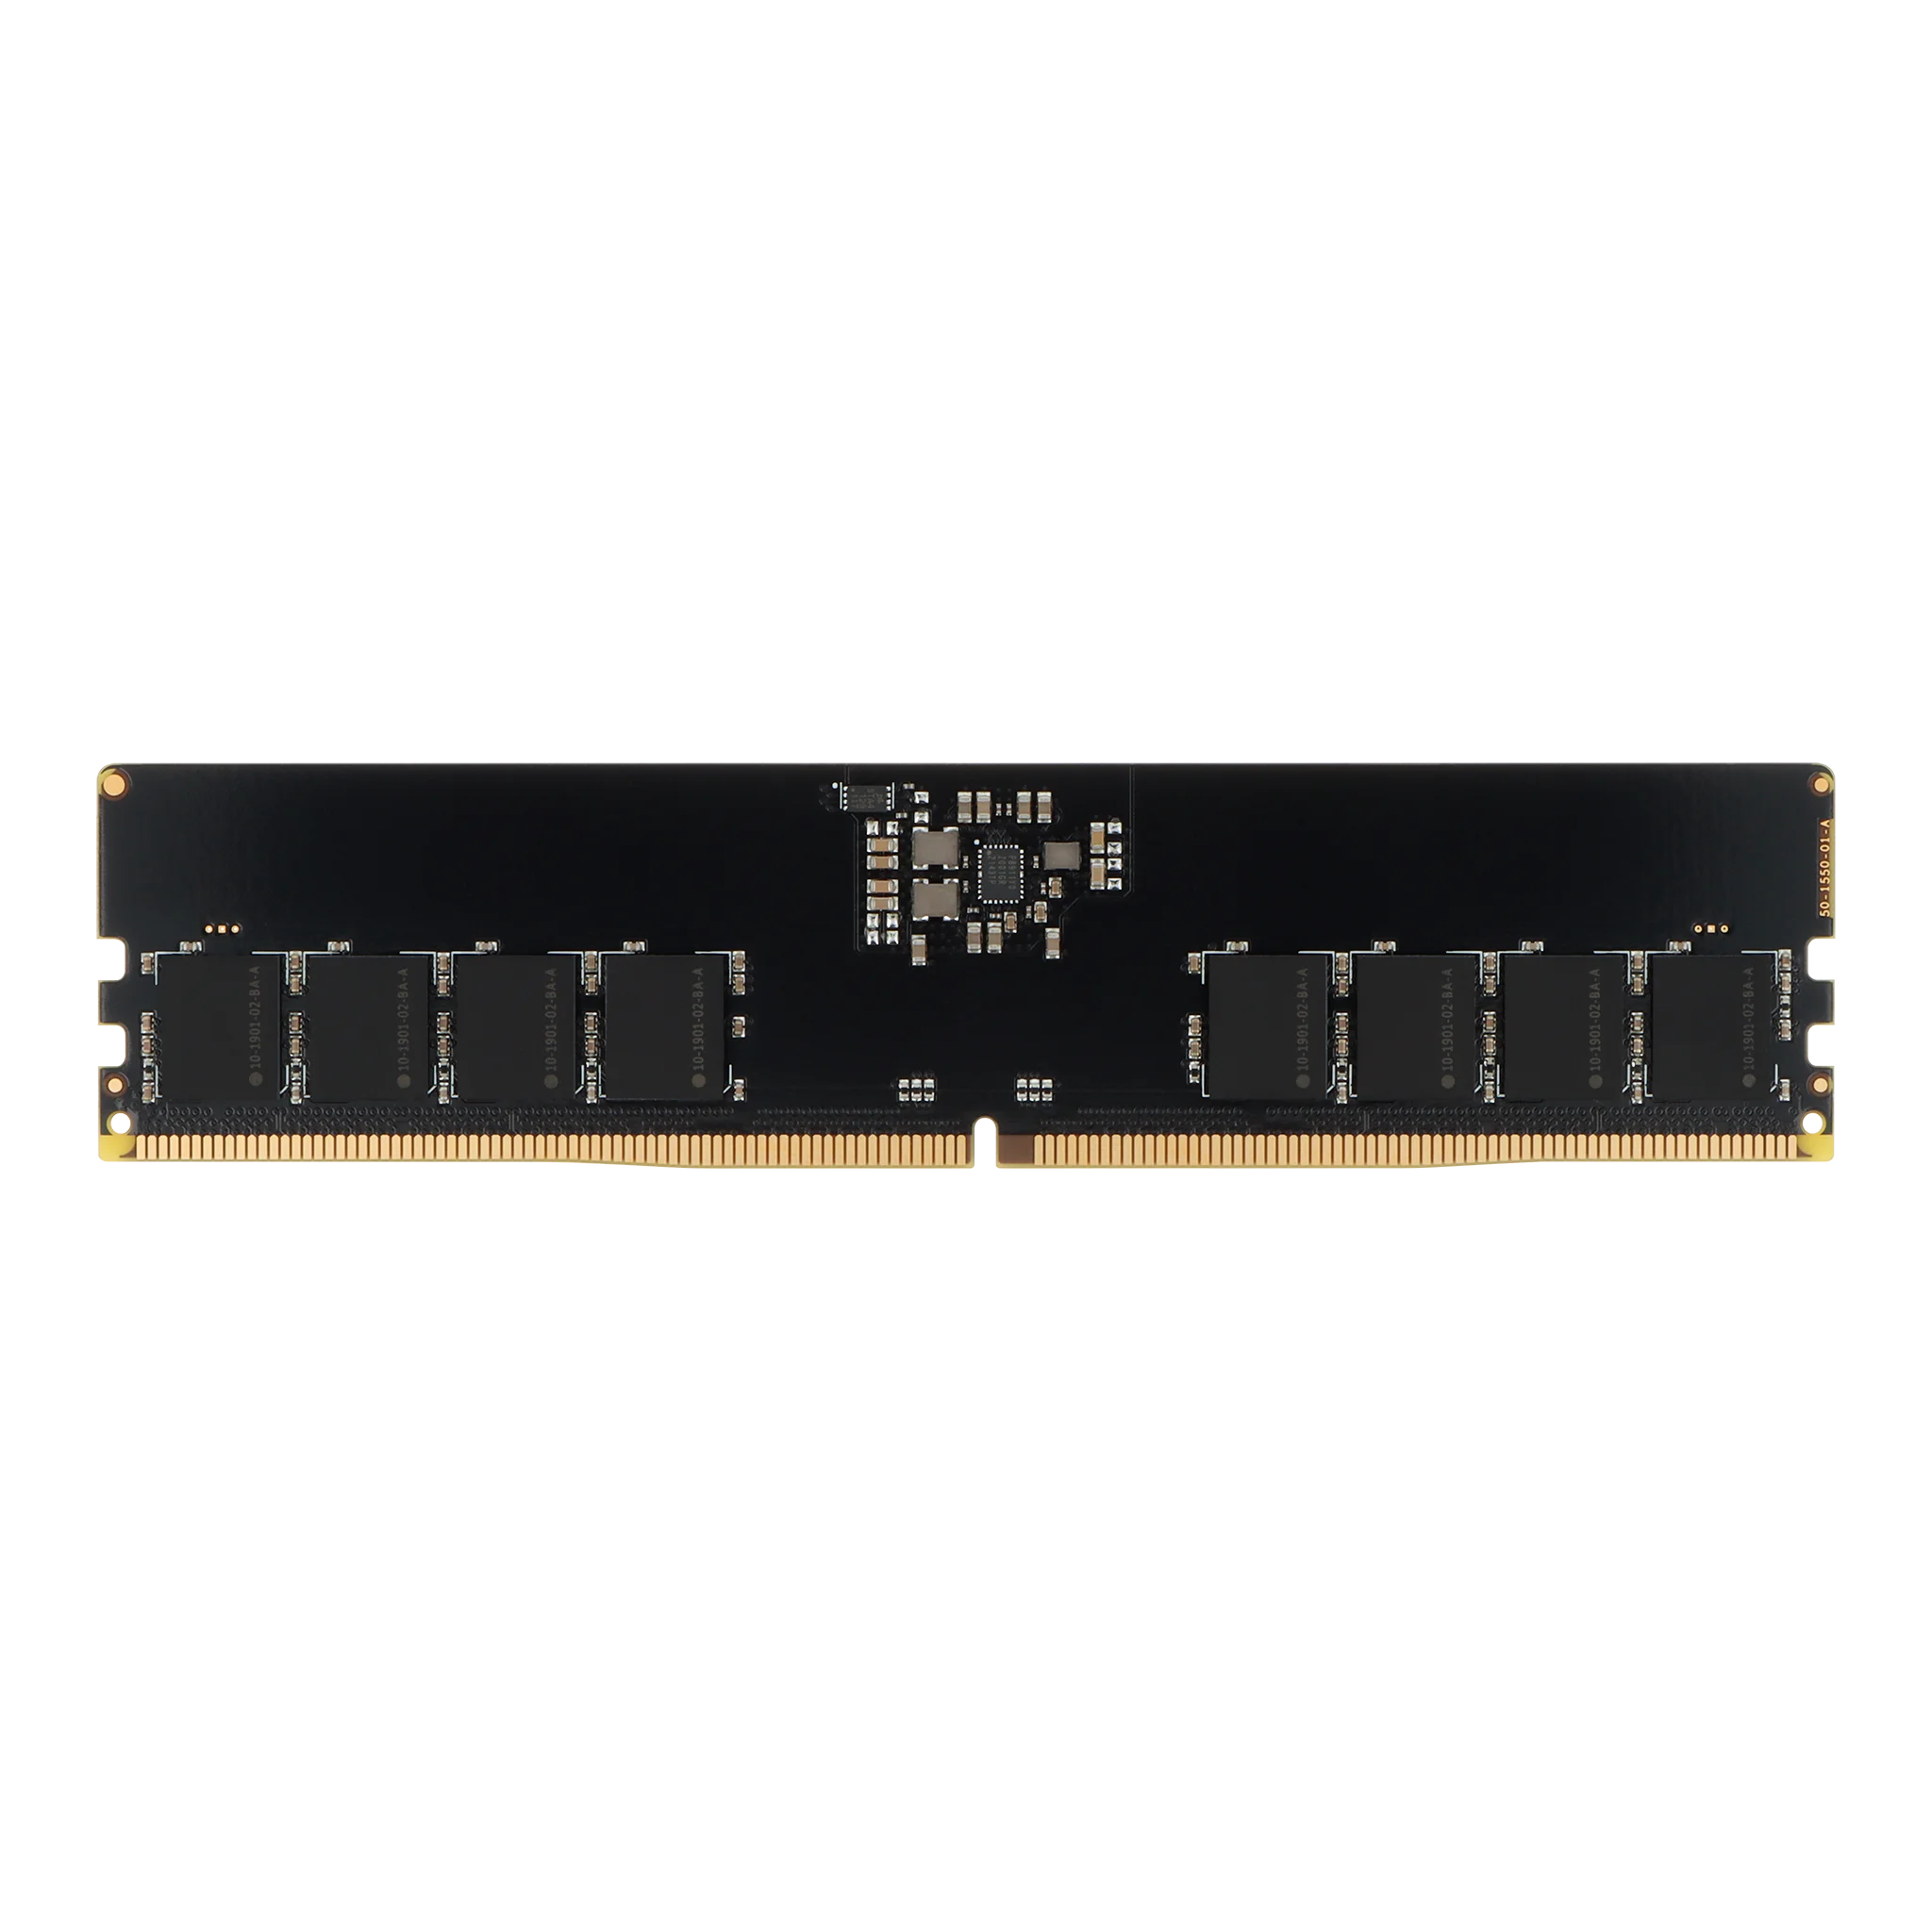 Lexar 16GB DDR4 , 3200MHz Speed – Epic Computers